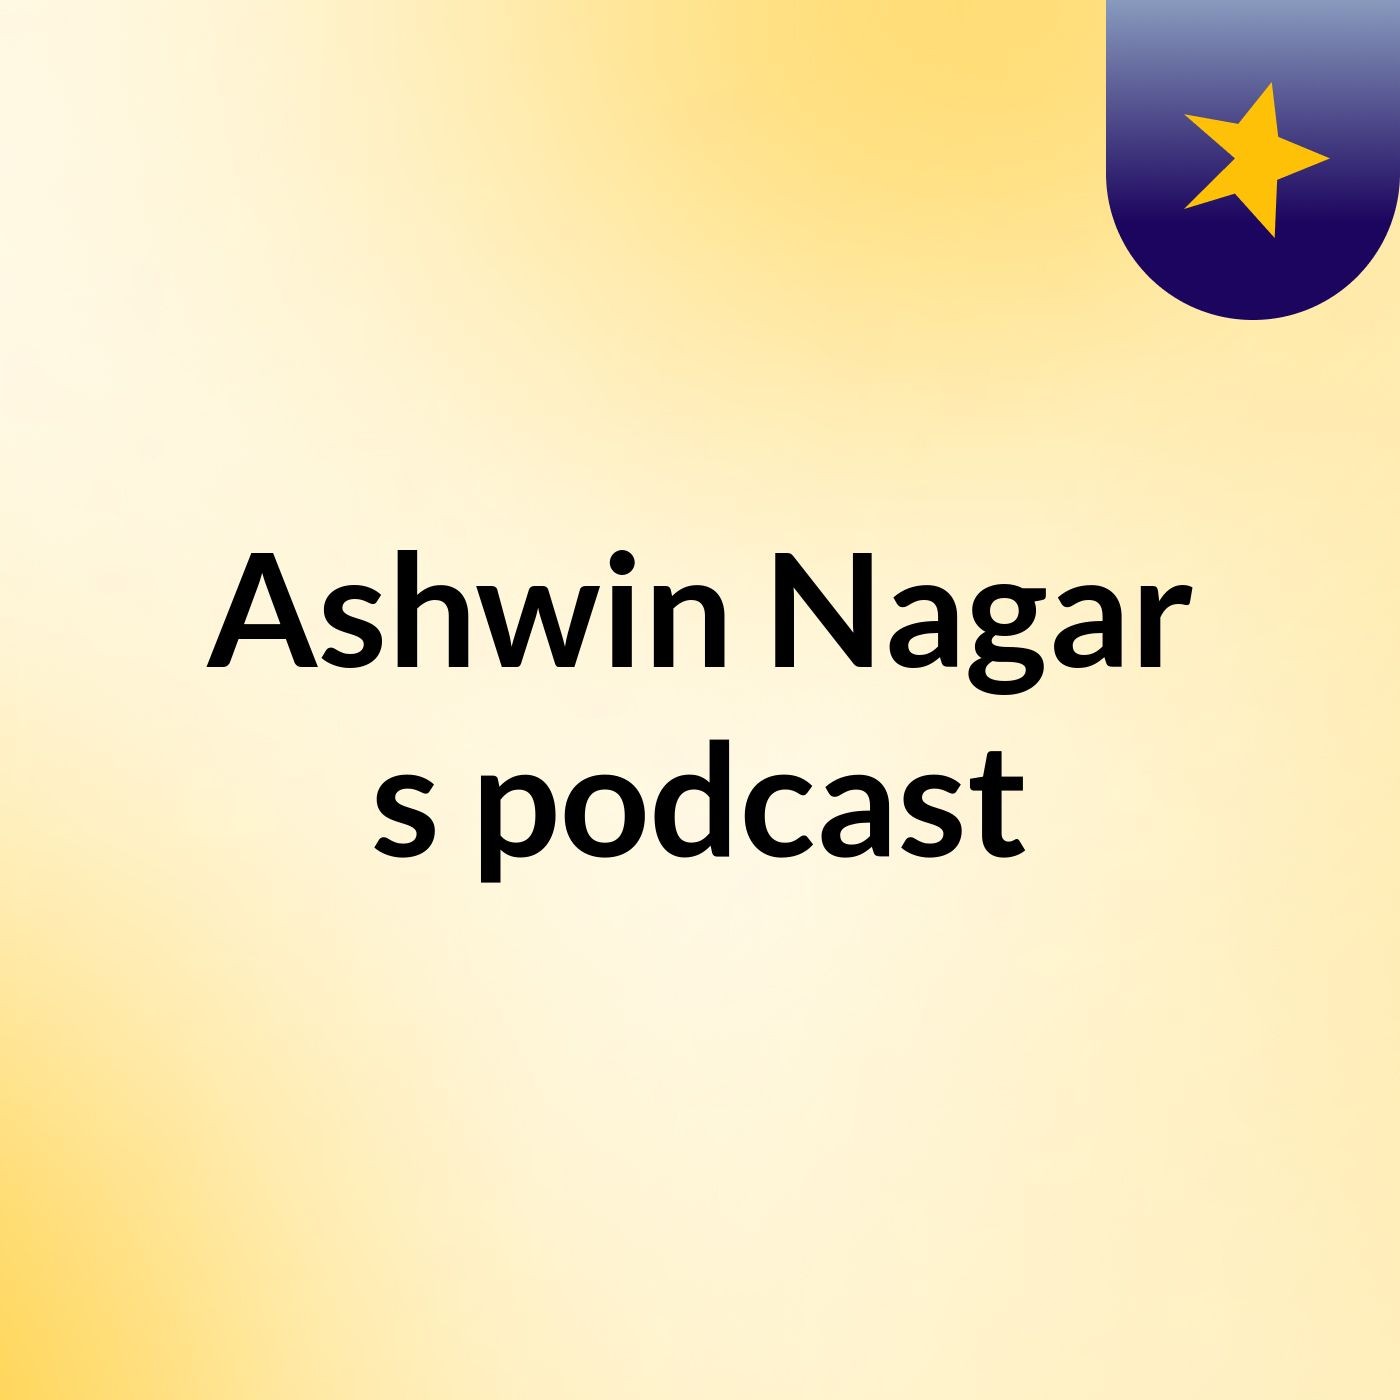 Episode 1 - Ashwin Nagar's podcast